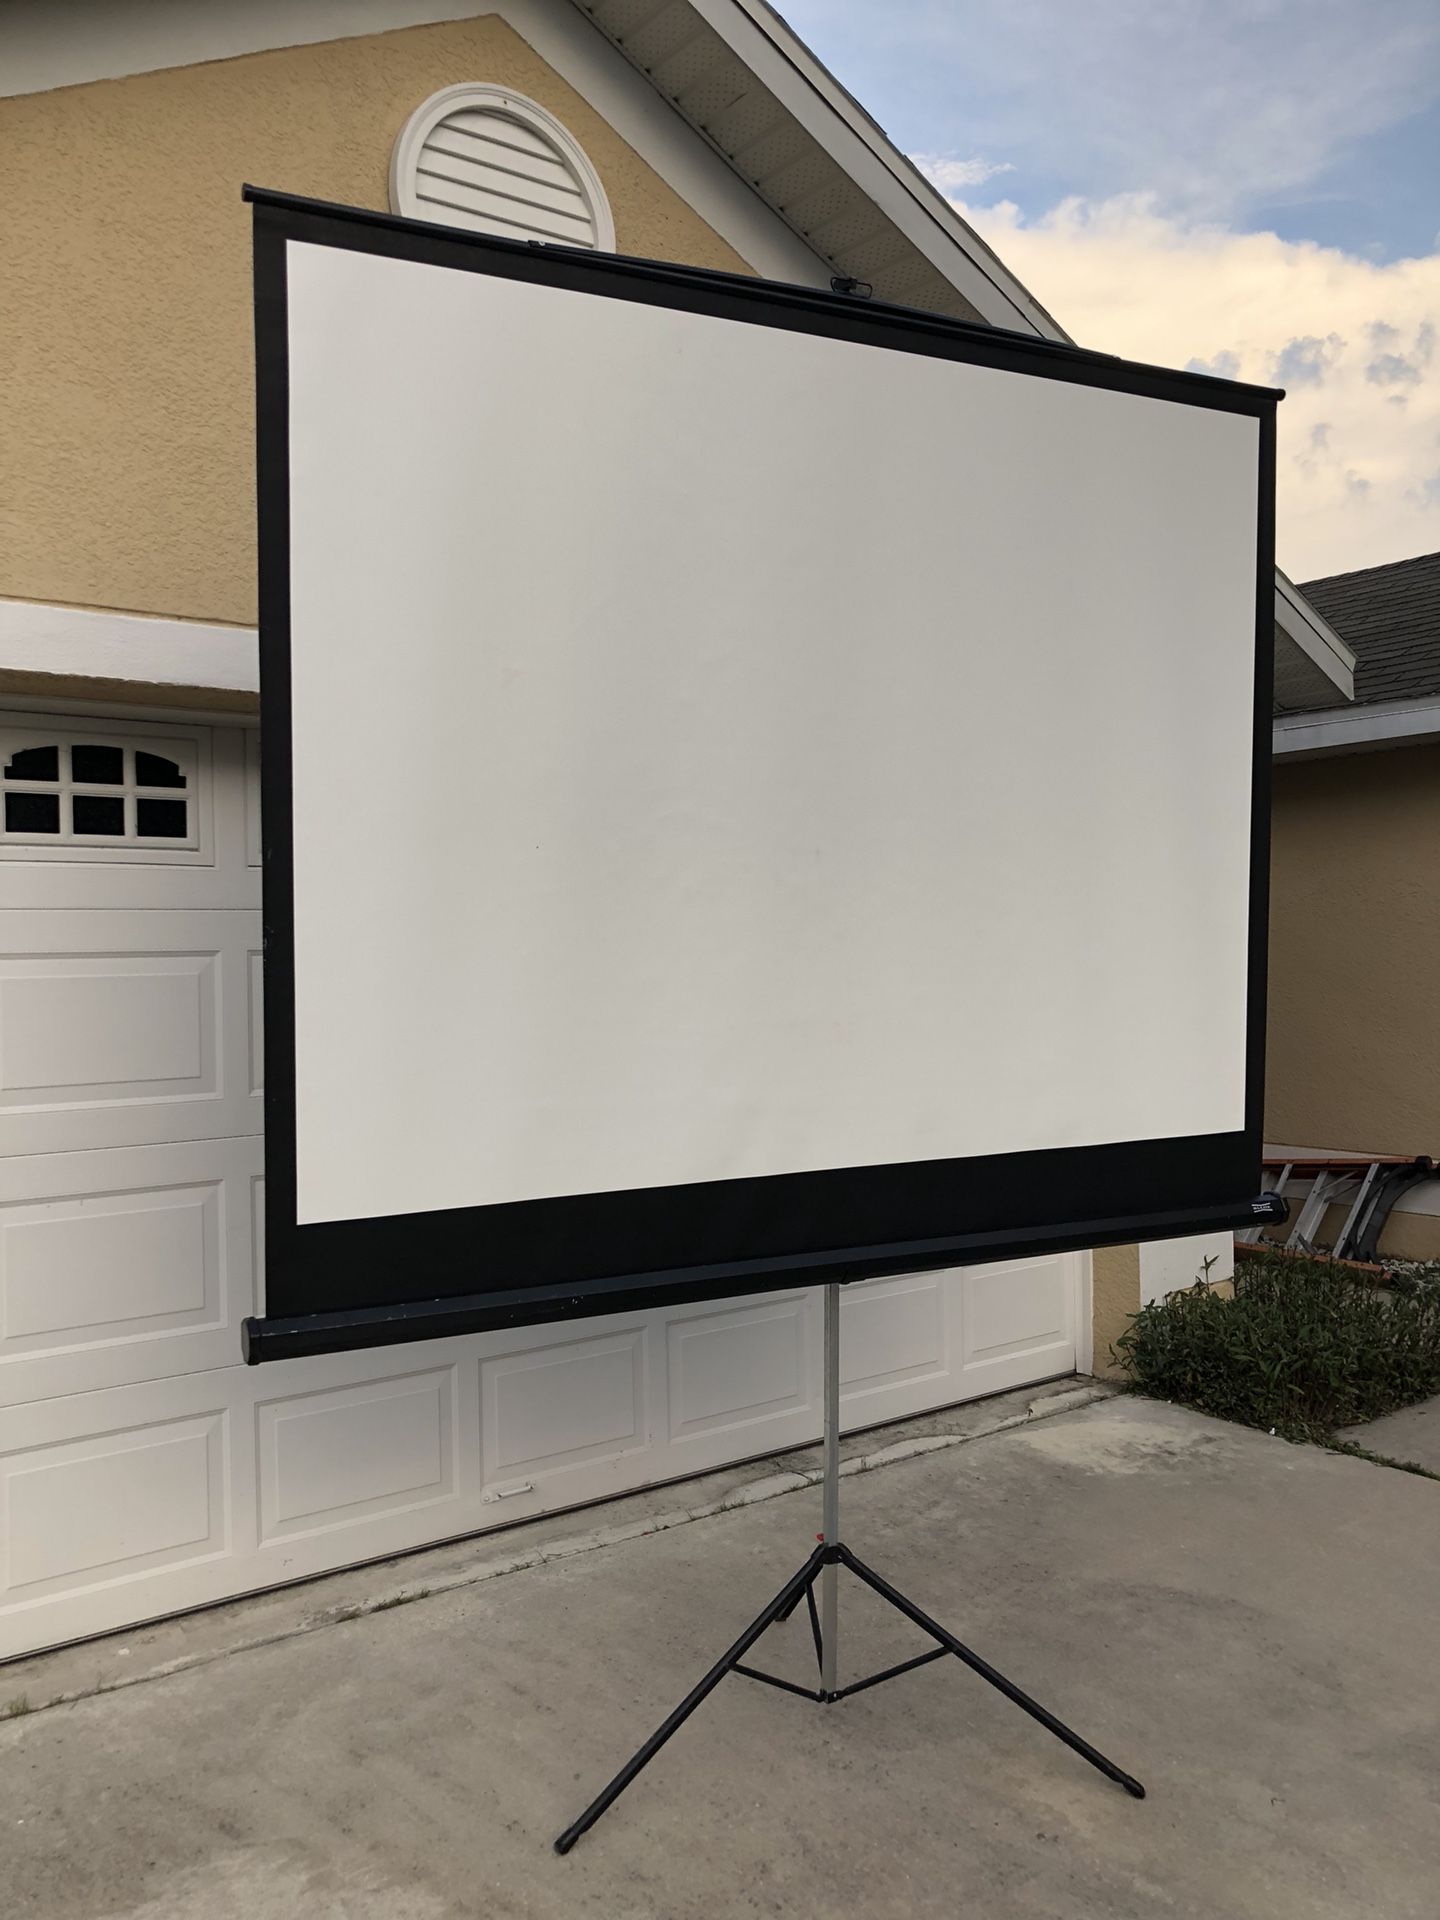 Projector screen